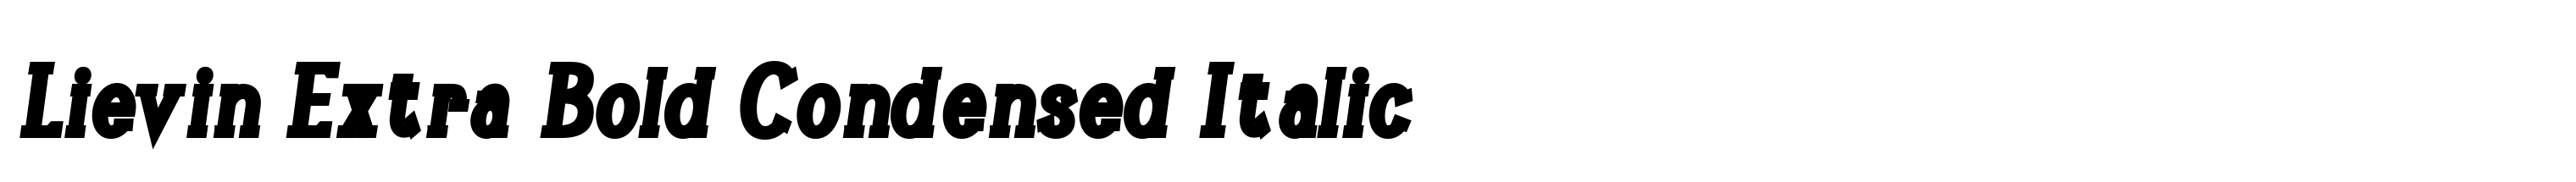 Lievin Extra Bold Condensed Italic